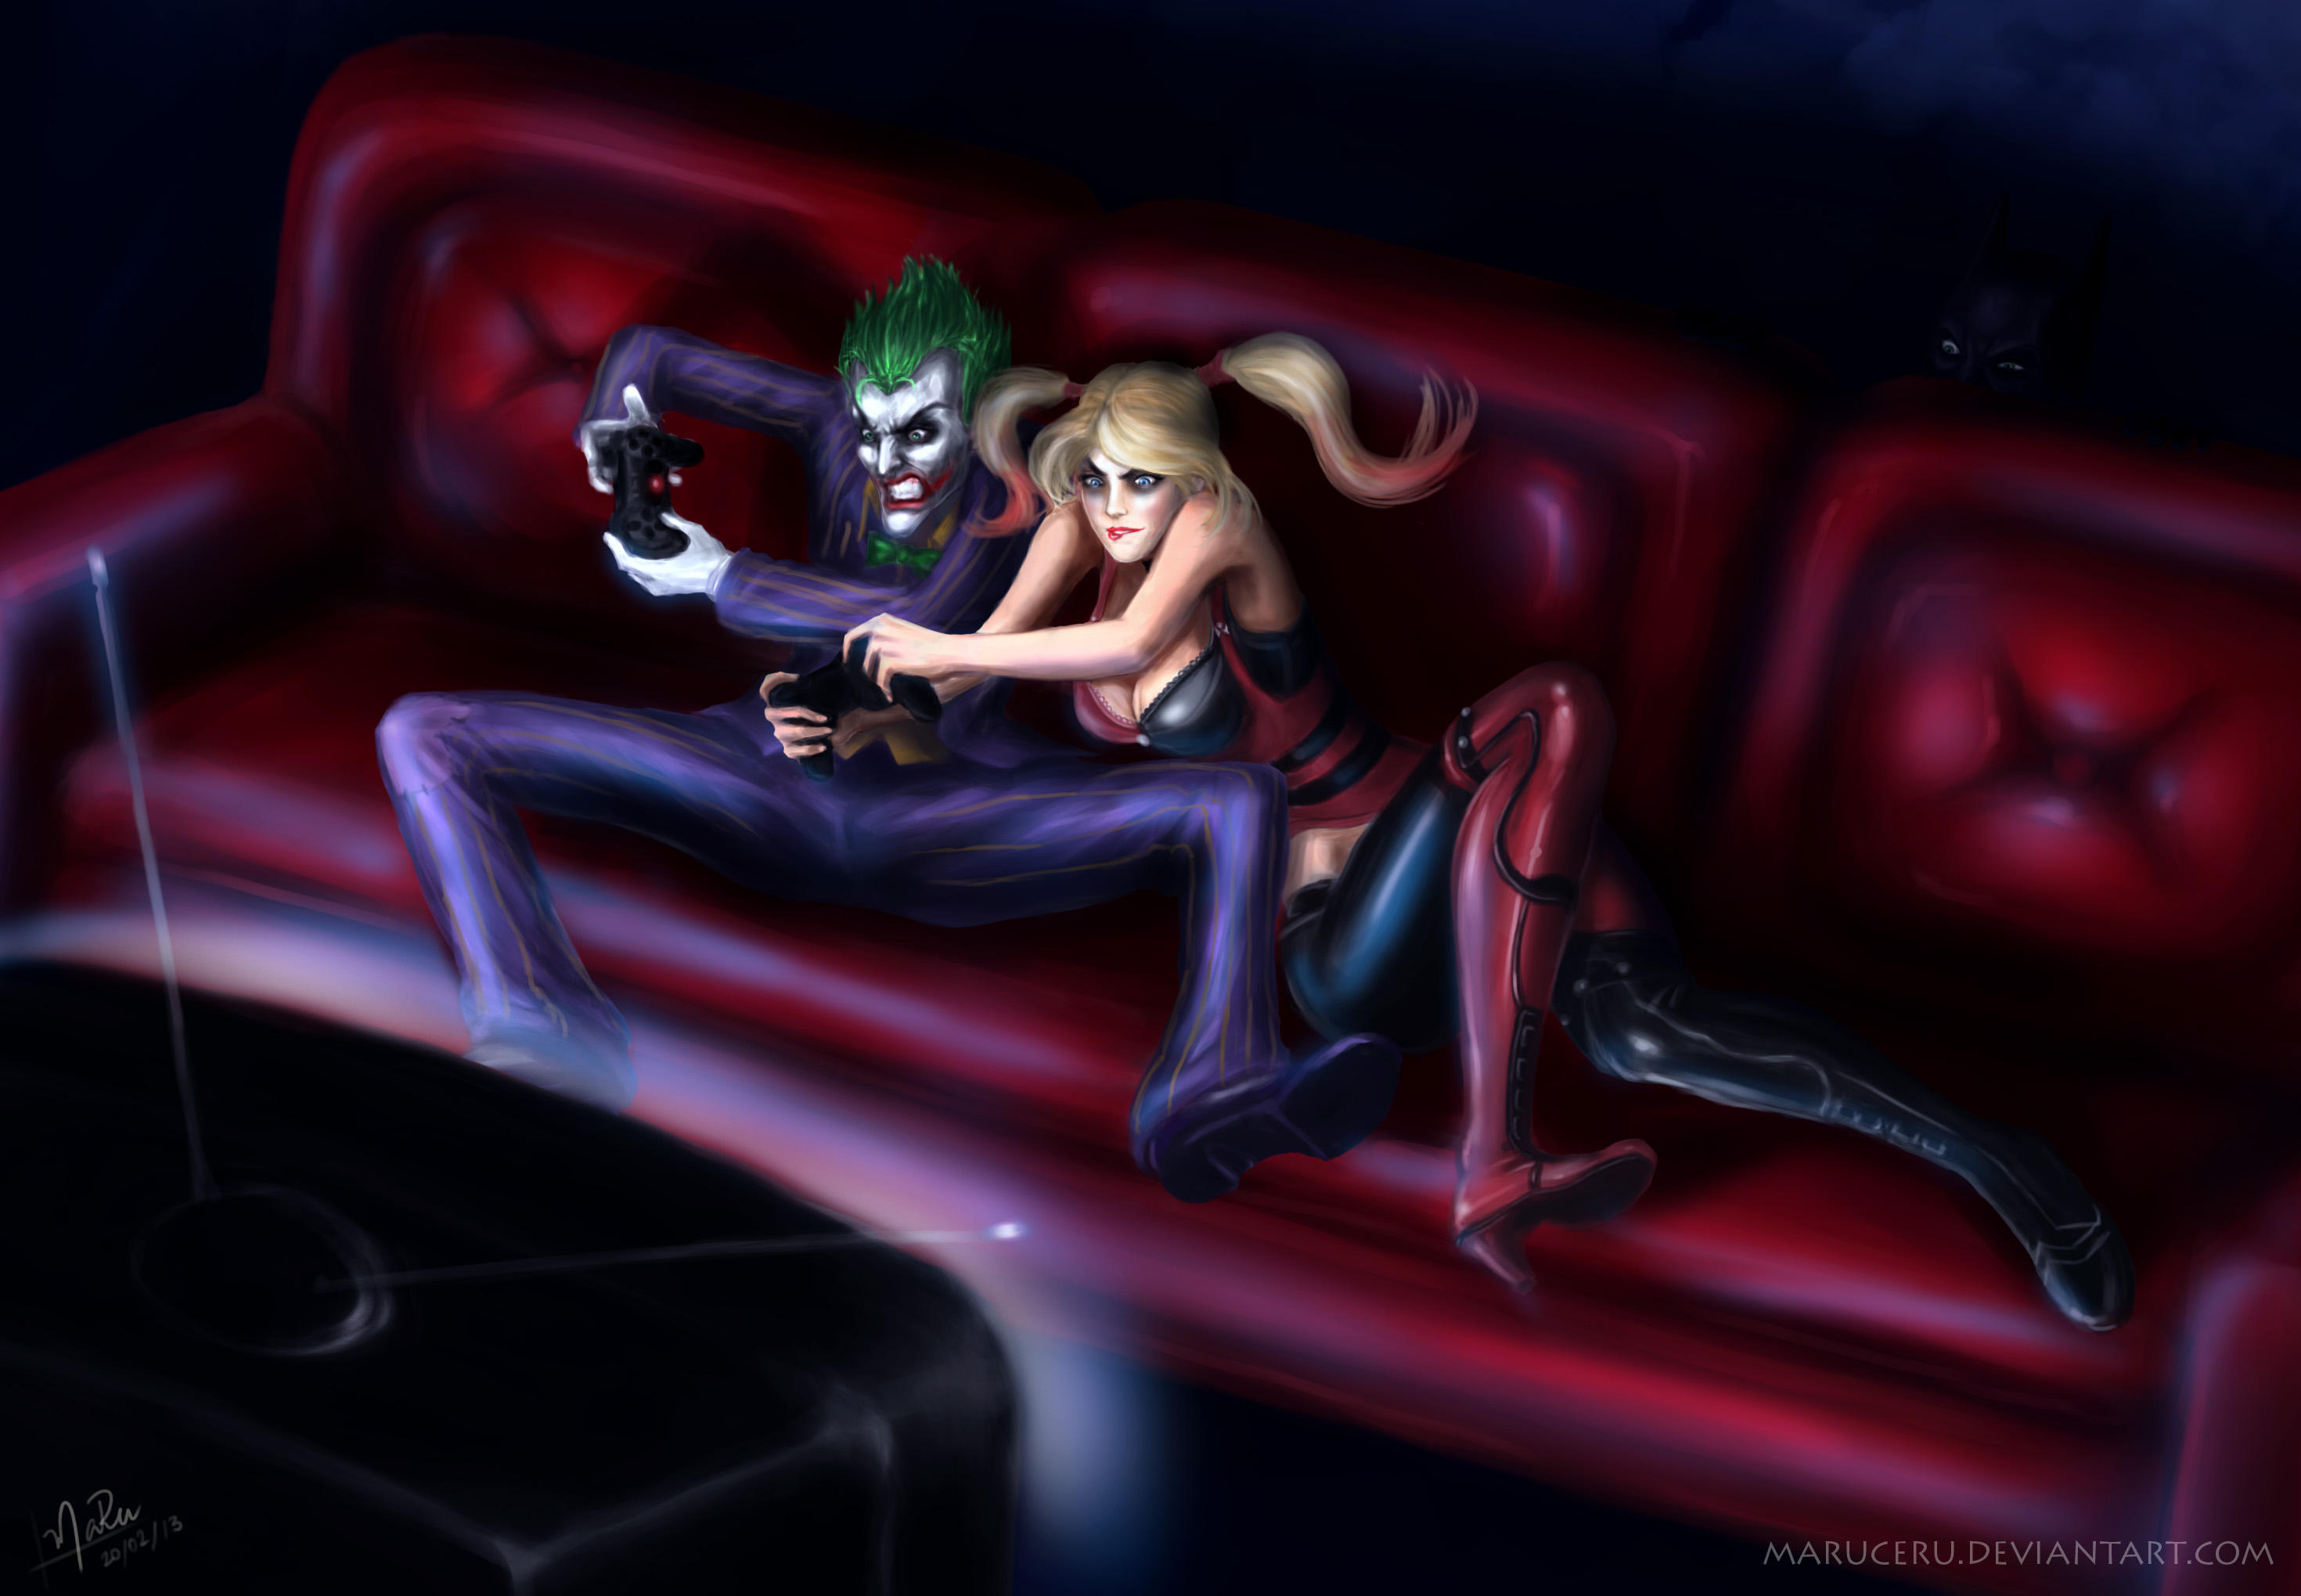 Harley And Joker Playing Games, HD Superheroes, 4k Wallpapers